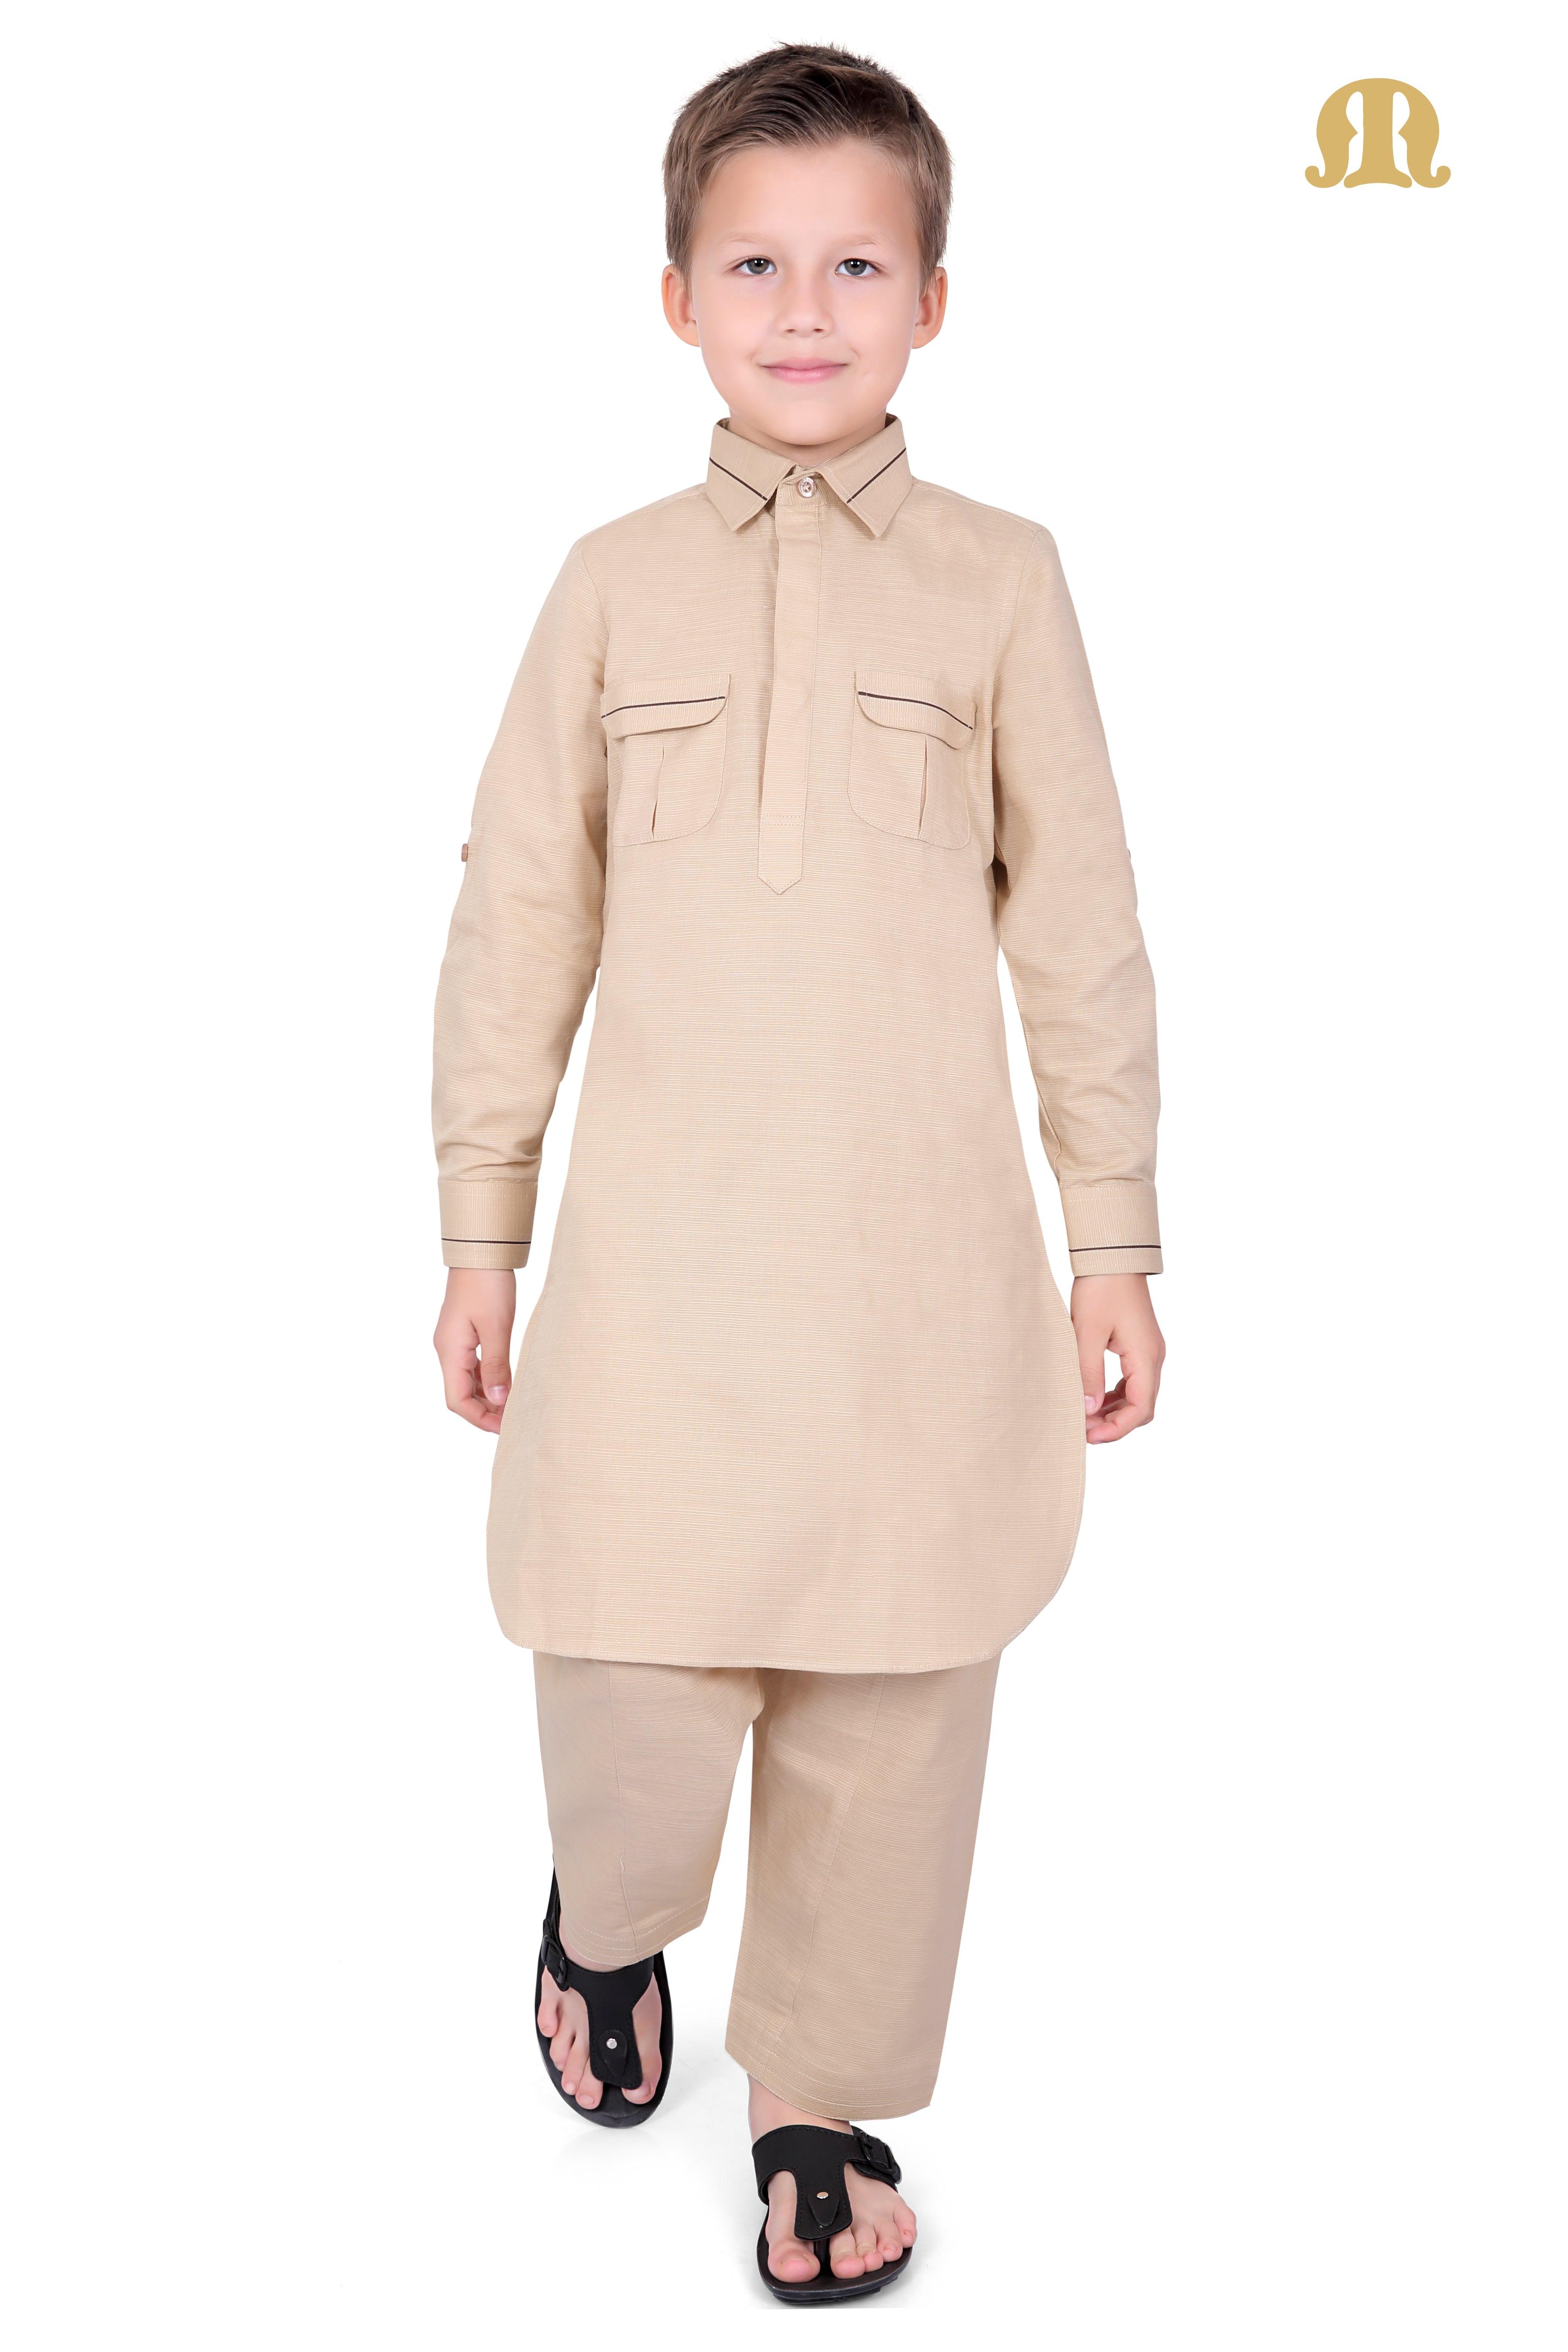 Beige Riwaya Pathani Suit for Kids - Mashroo